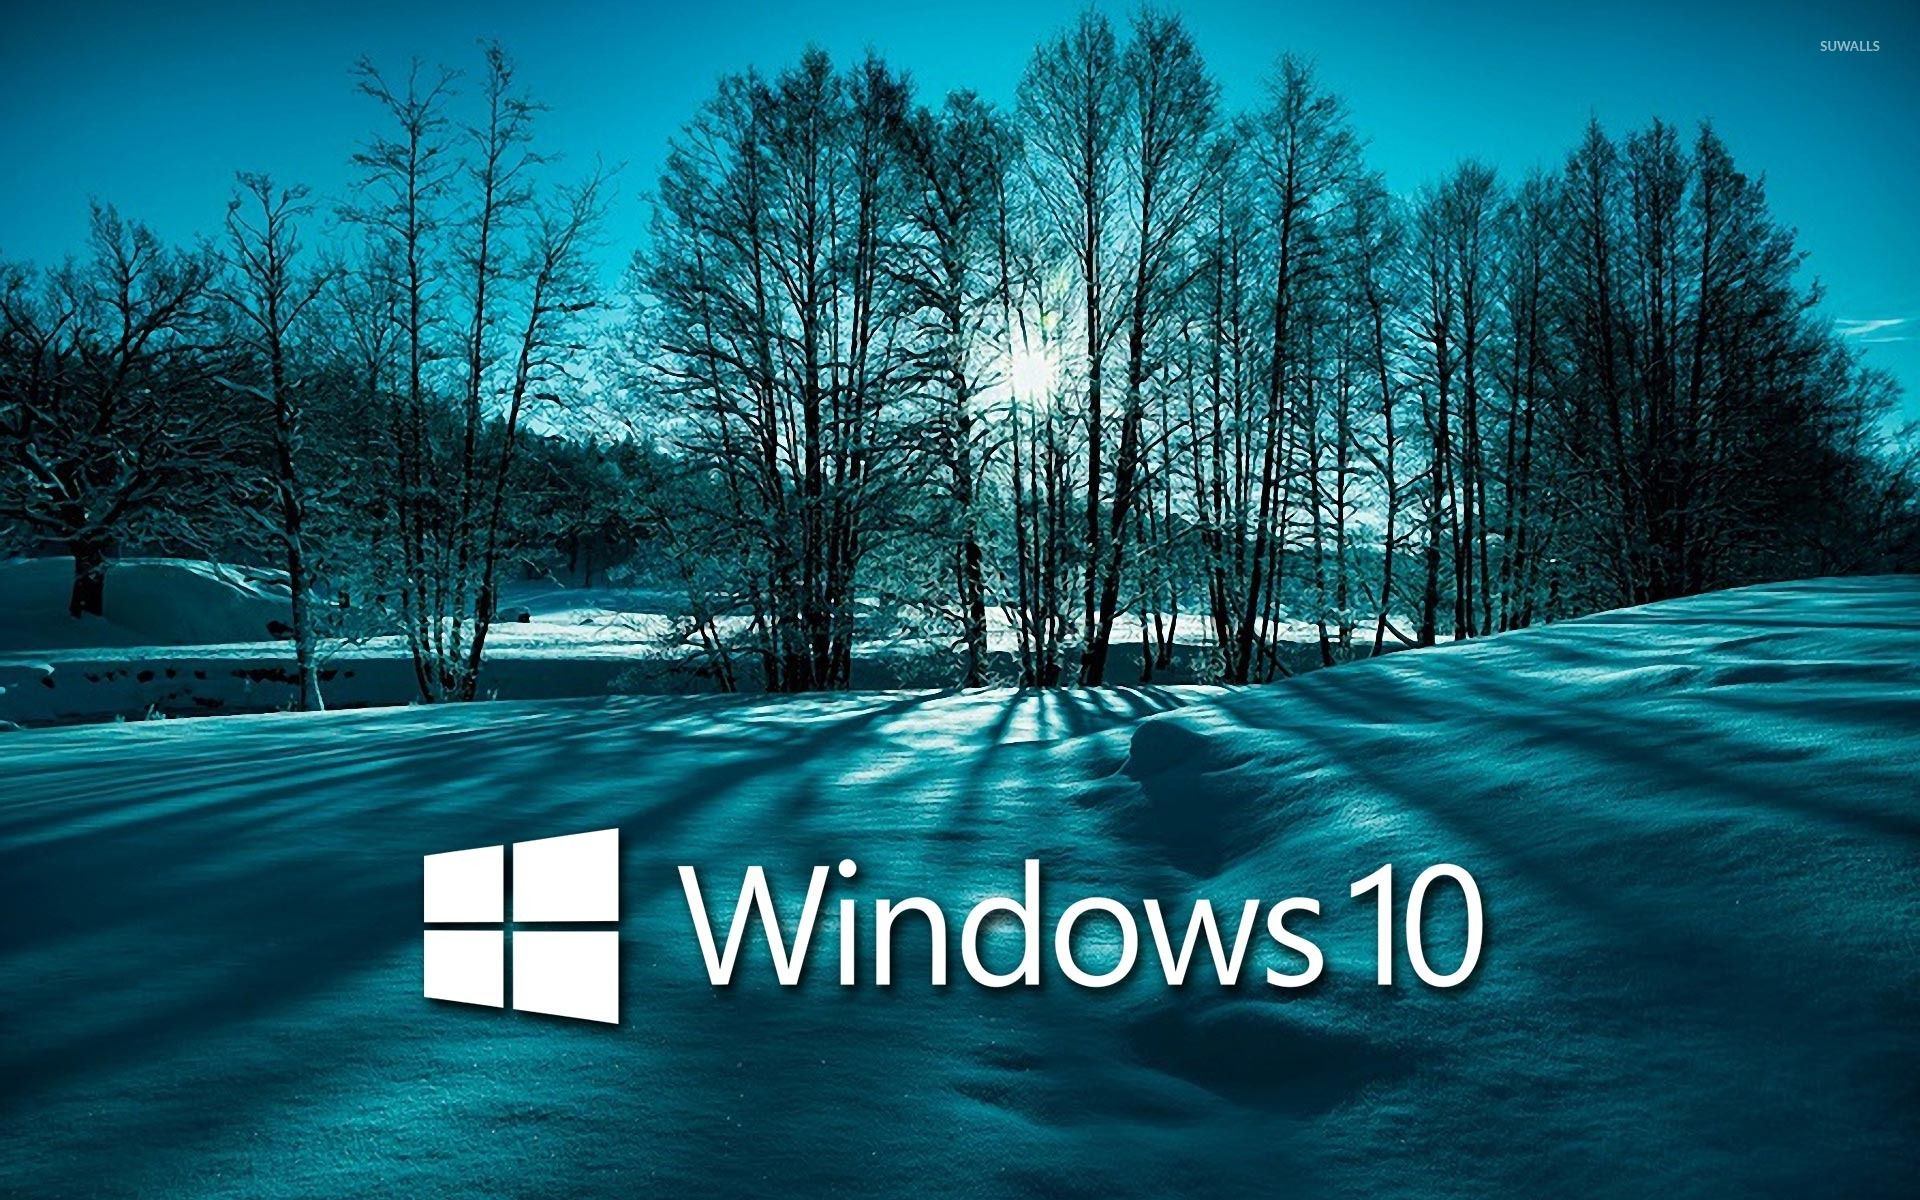 windows 10 wallpaper free download